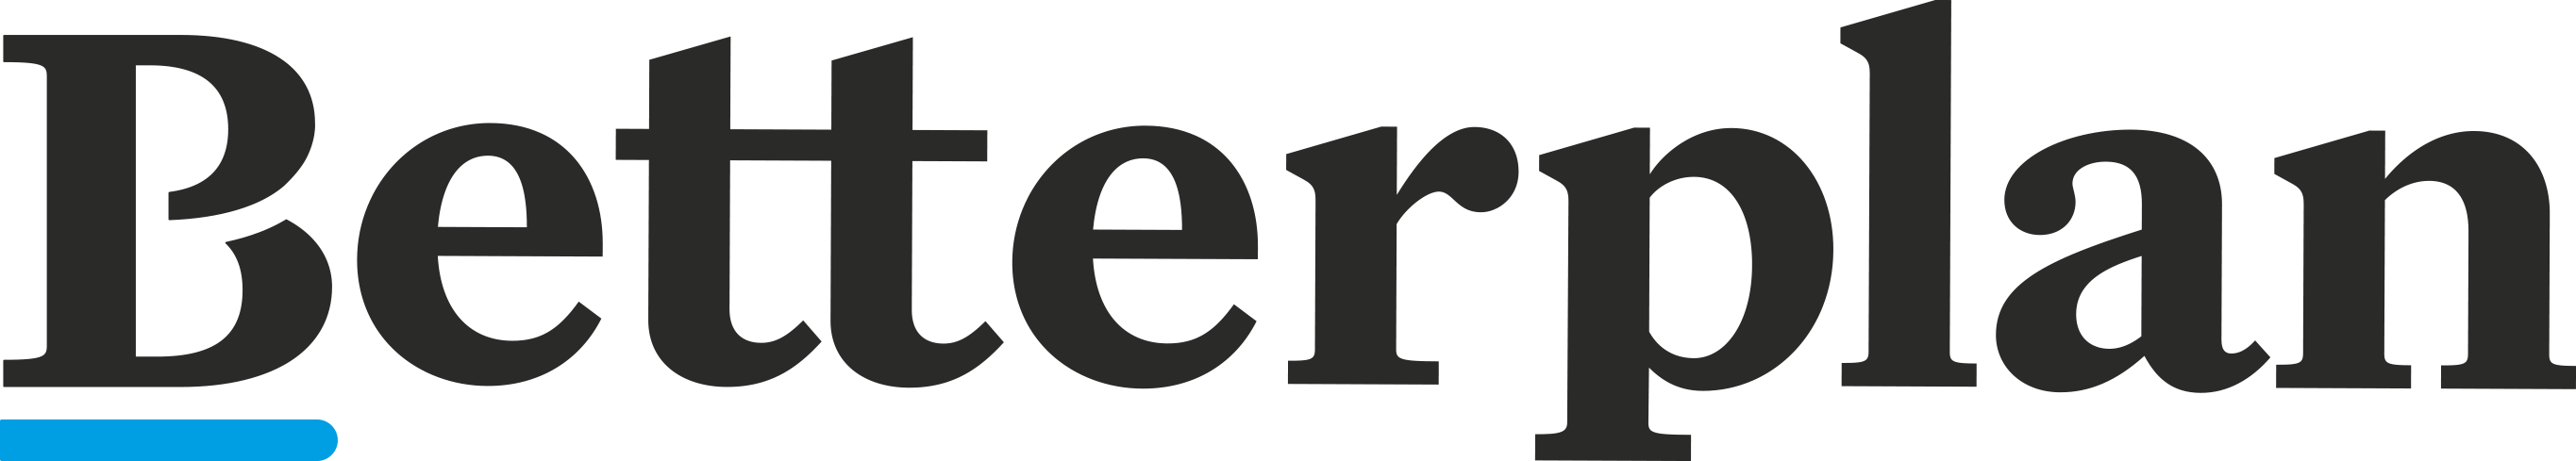 BETTERPLAN logo